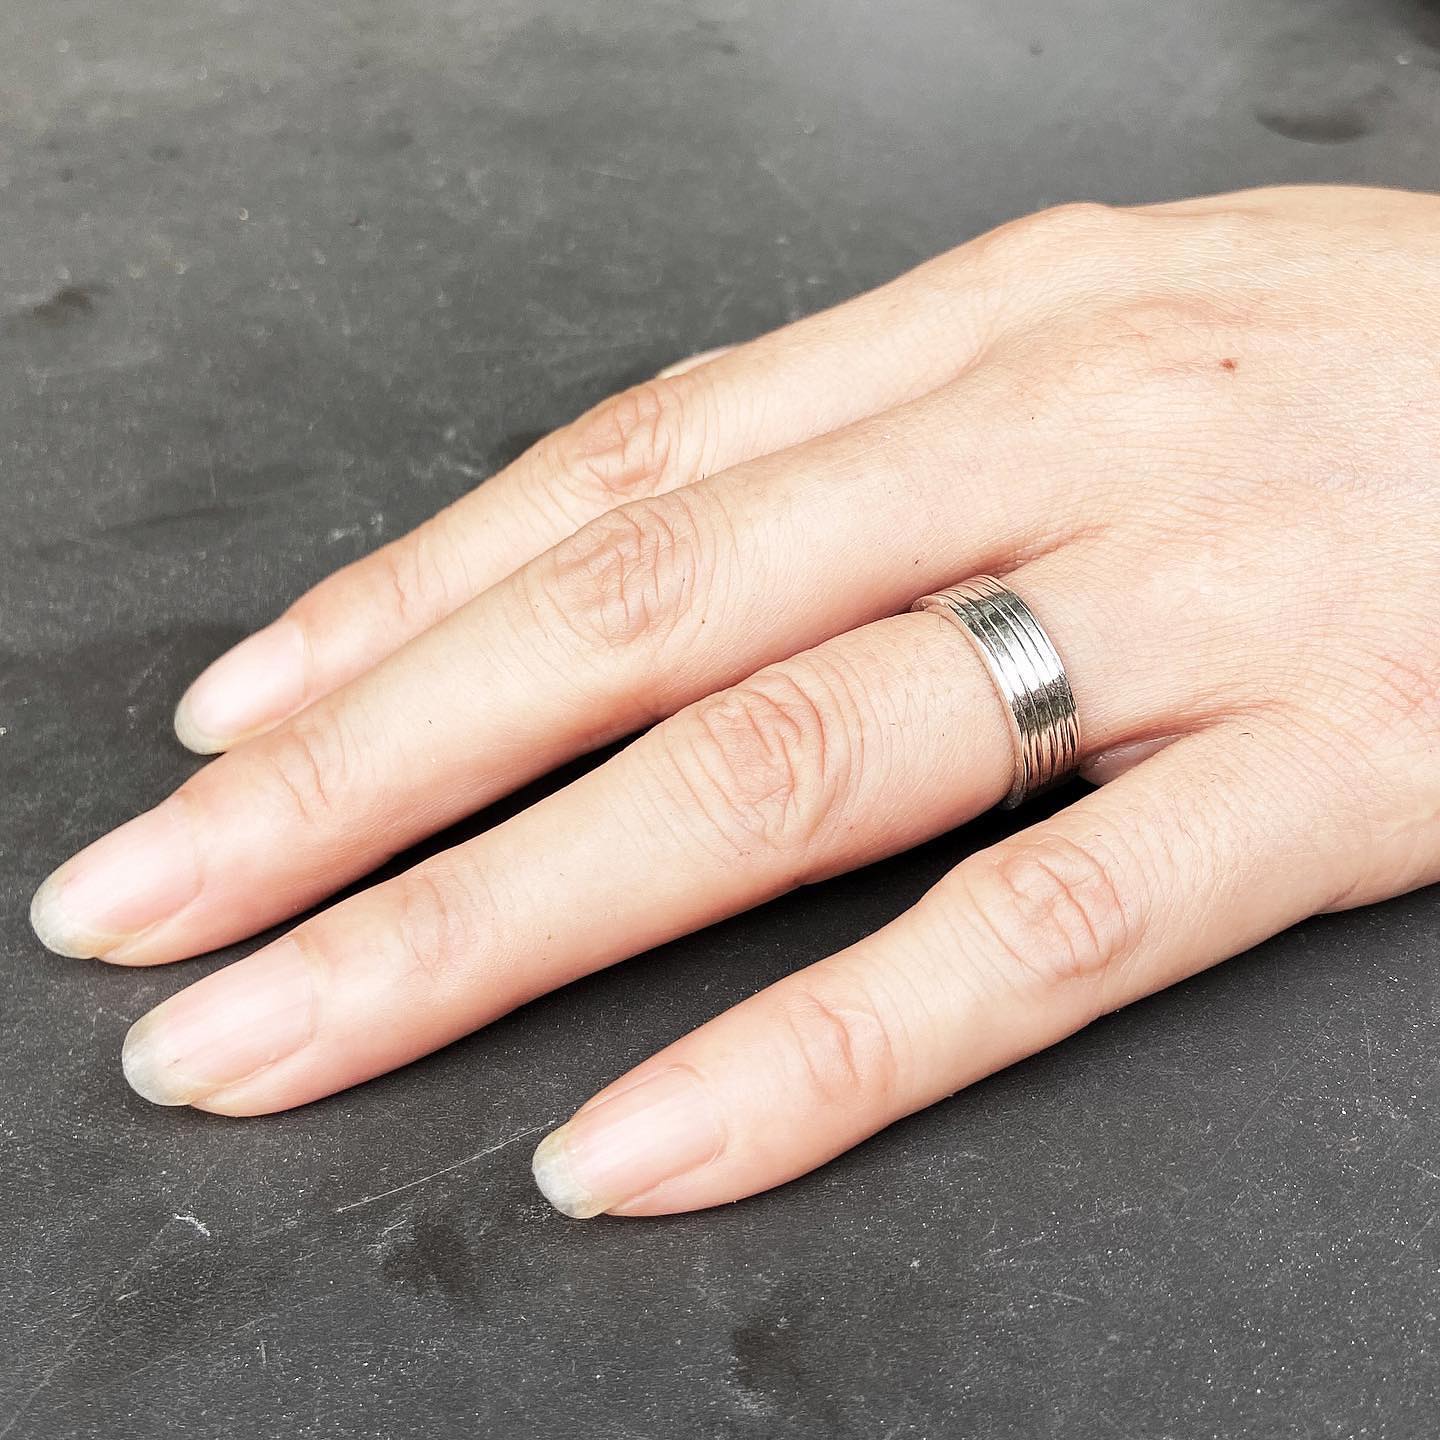 Handmade Sterling Silver925 ring